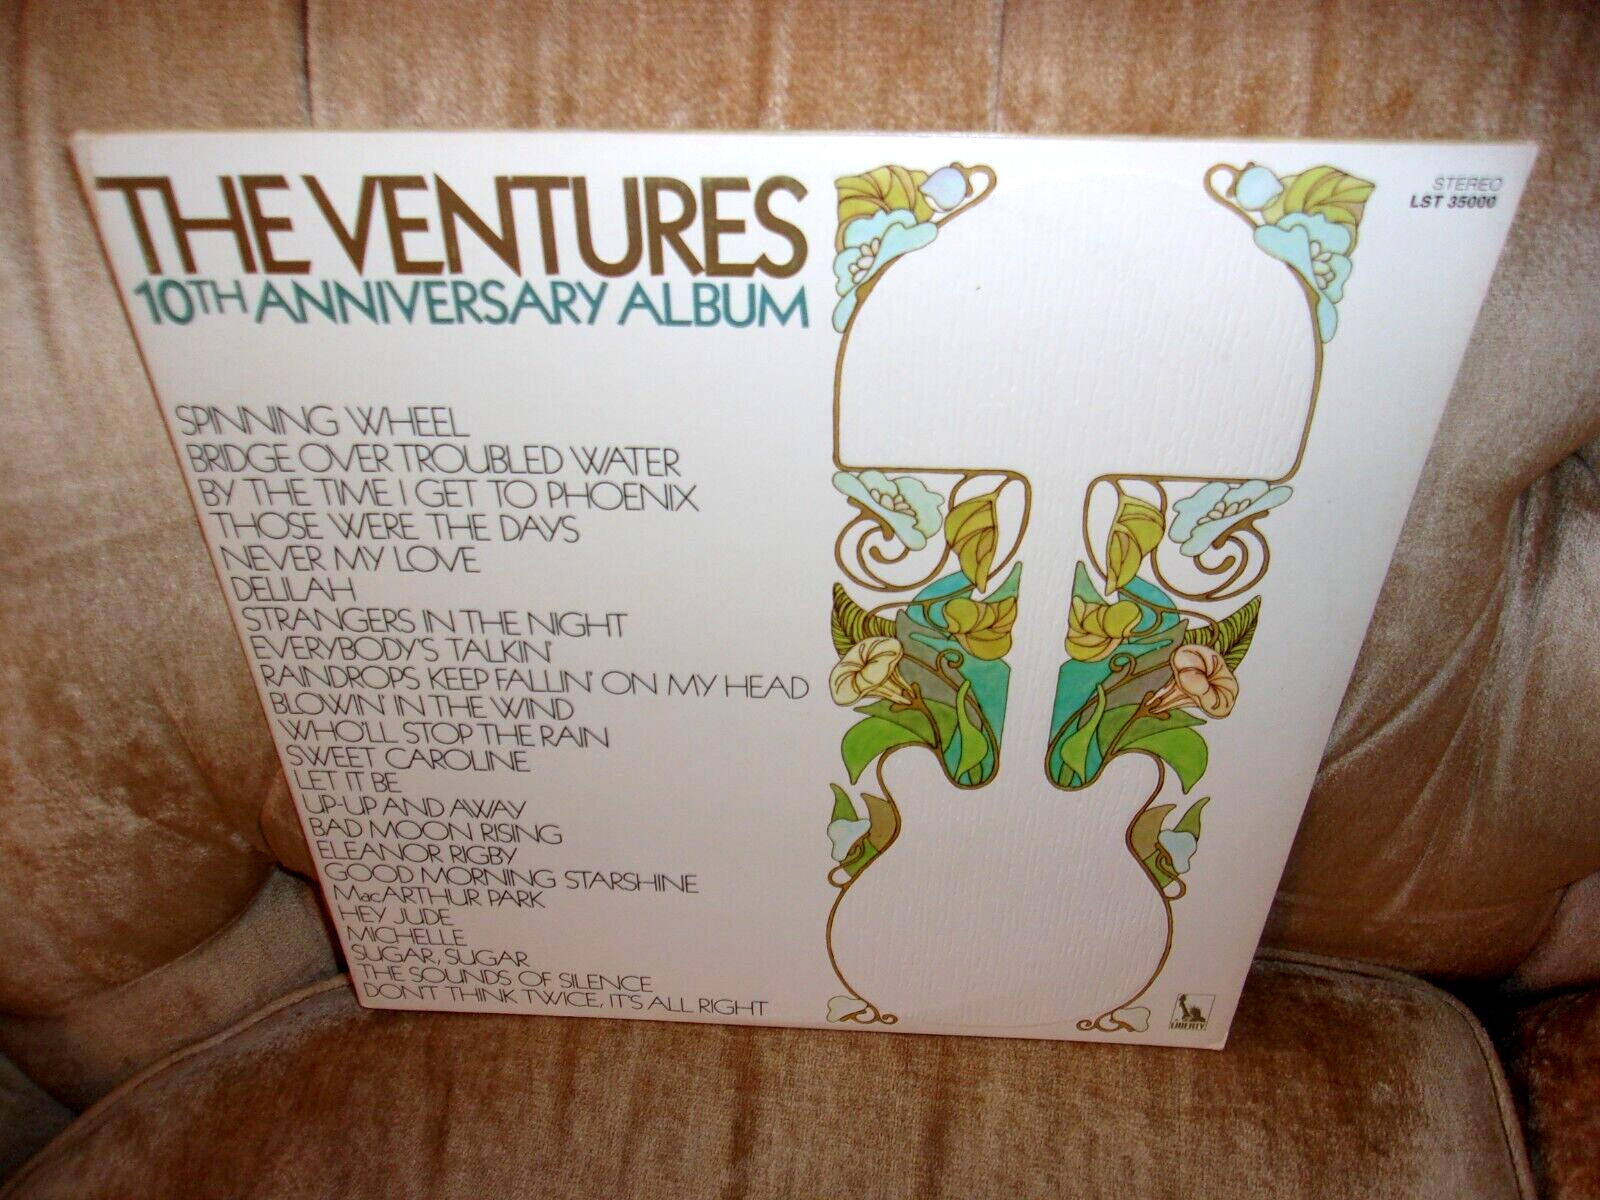 The Ventures – 10th Anniversary Album (Liberty LST 35000, 1970) 2 LPs